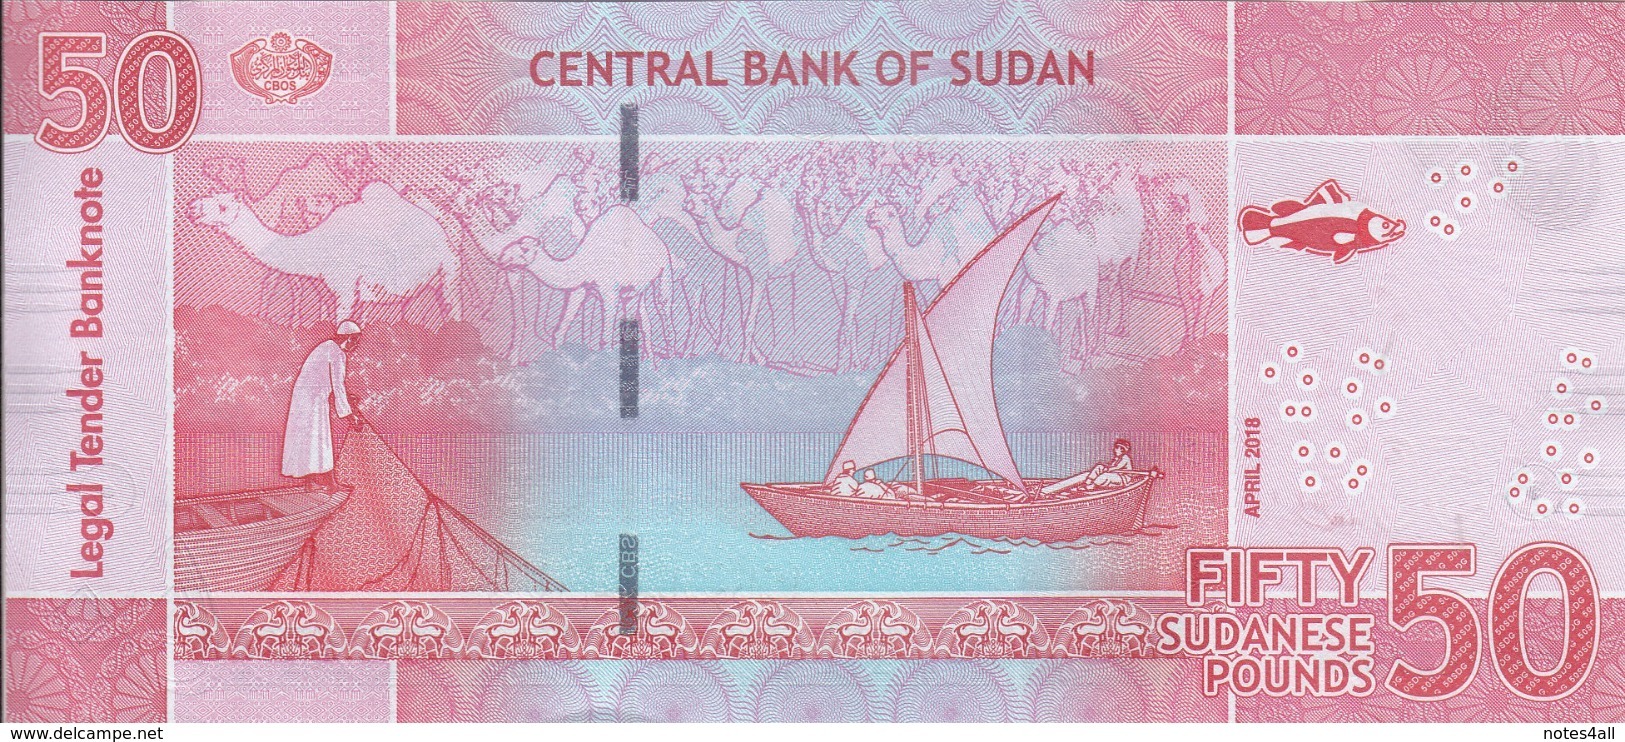 SUDAN 50 POUNDS 2018 P-NEW GLOSSY DARK COLOR TYPE UNC */* - Soedan